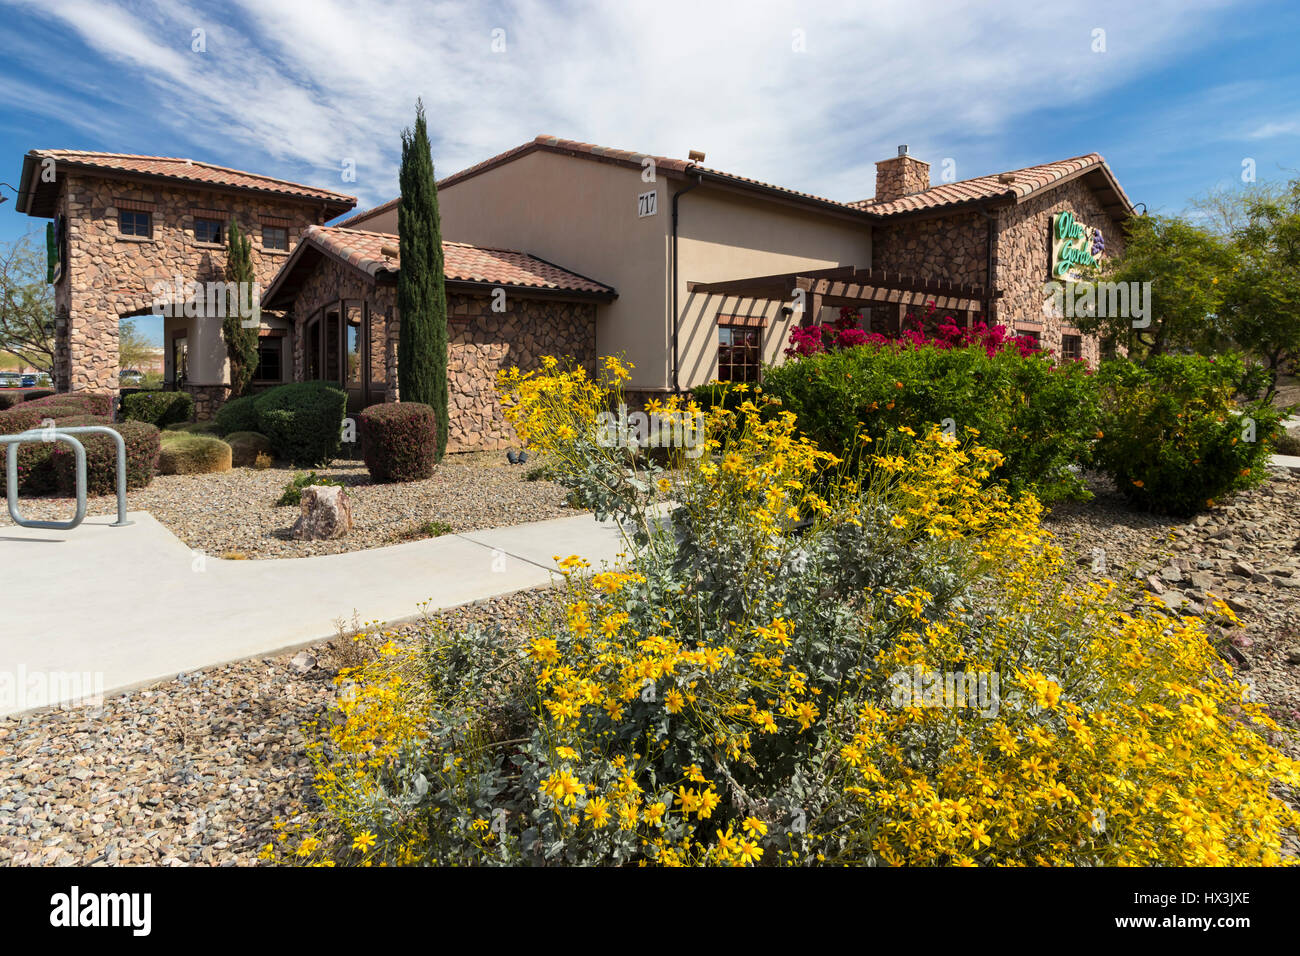 The Olive Garden restaurant in Casa Grande, Arizona, USA. Stock Photo